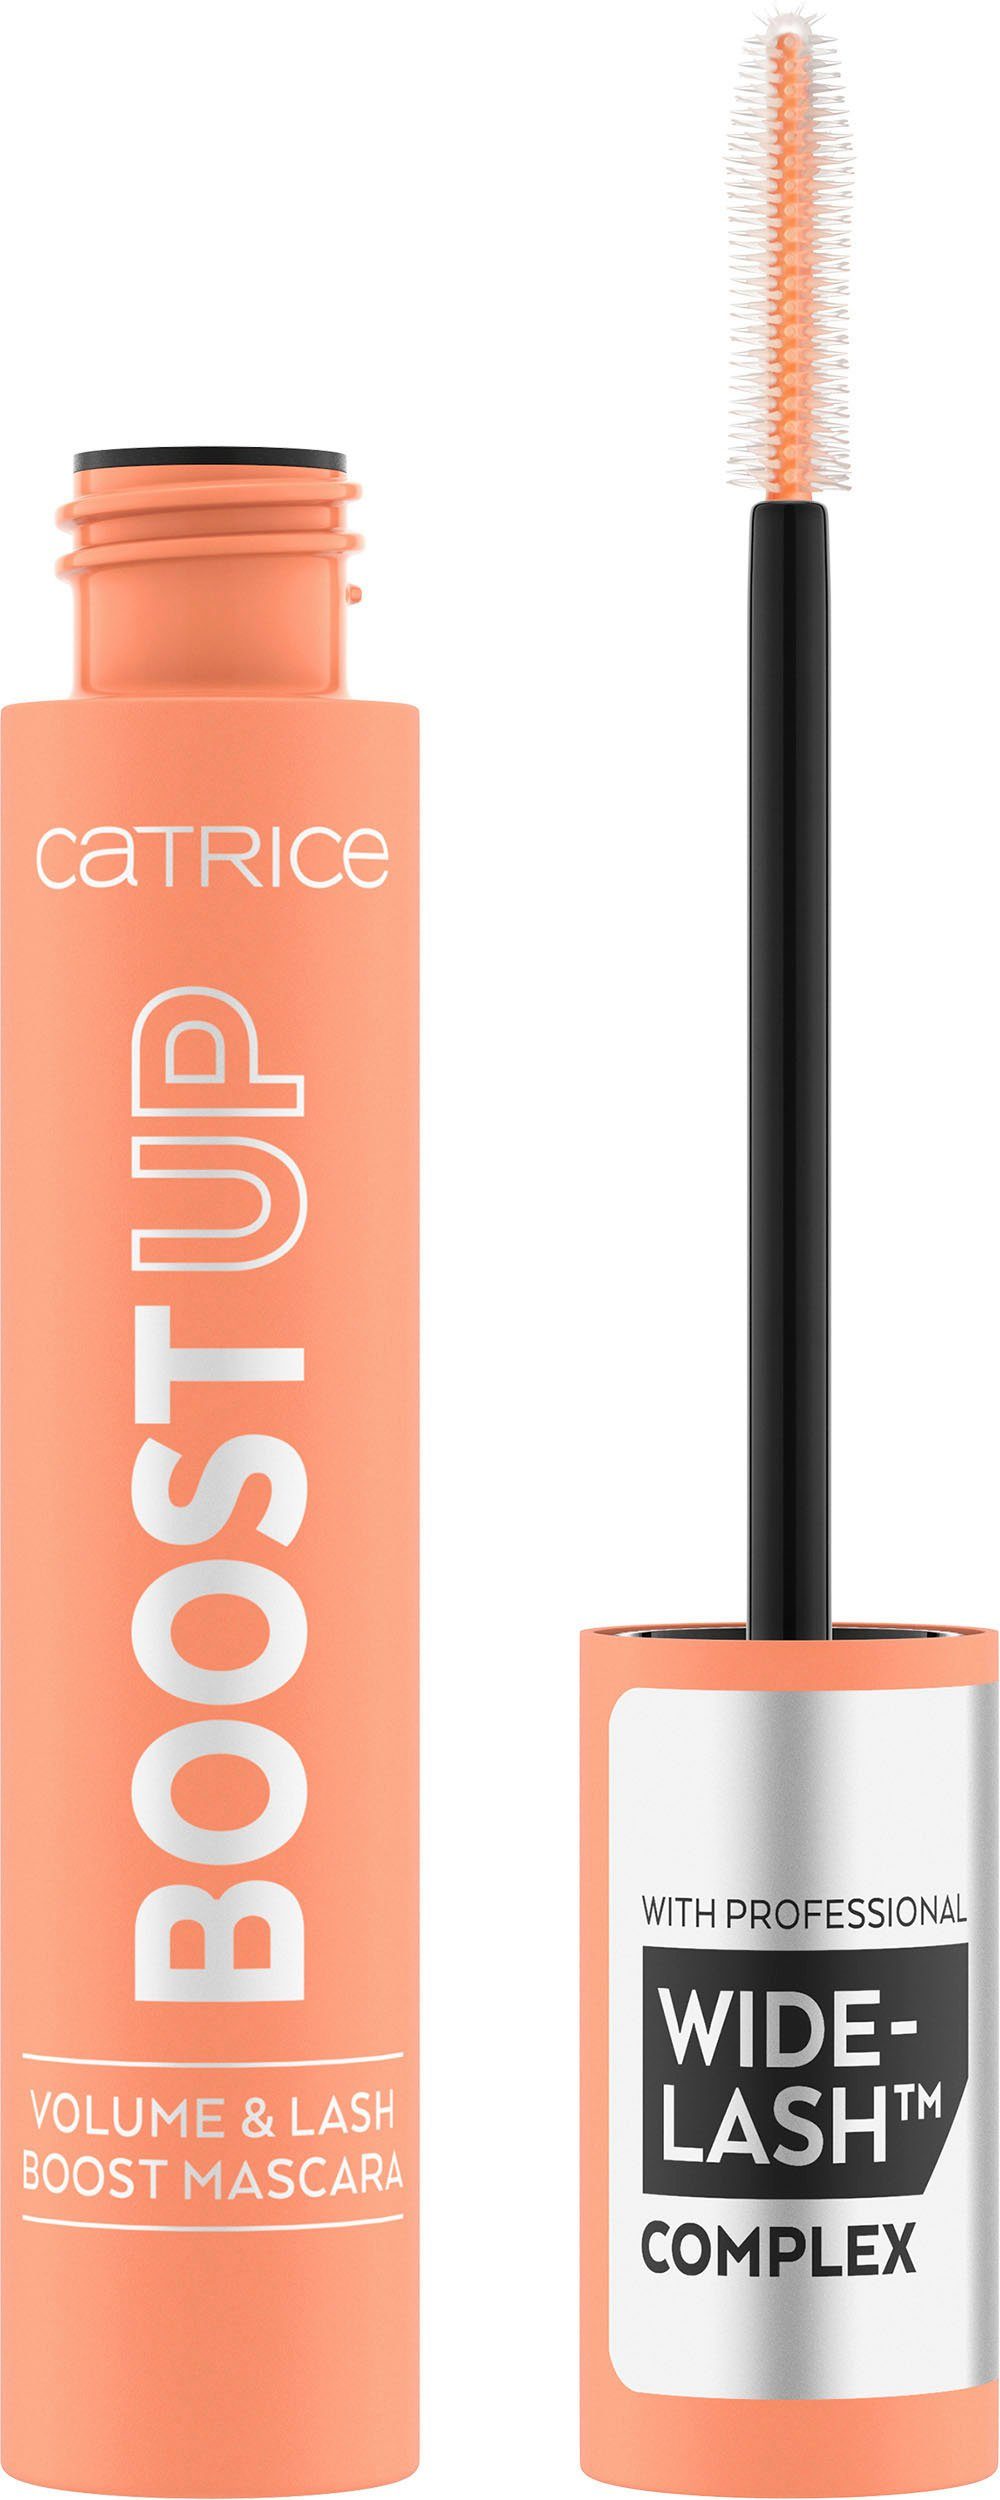 Catrice 3-tlg. BOOST Volume & Lash Mascara UP Mascara Boost Catrice 010,